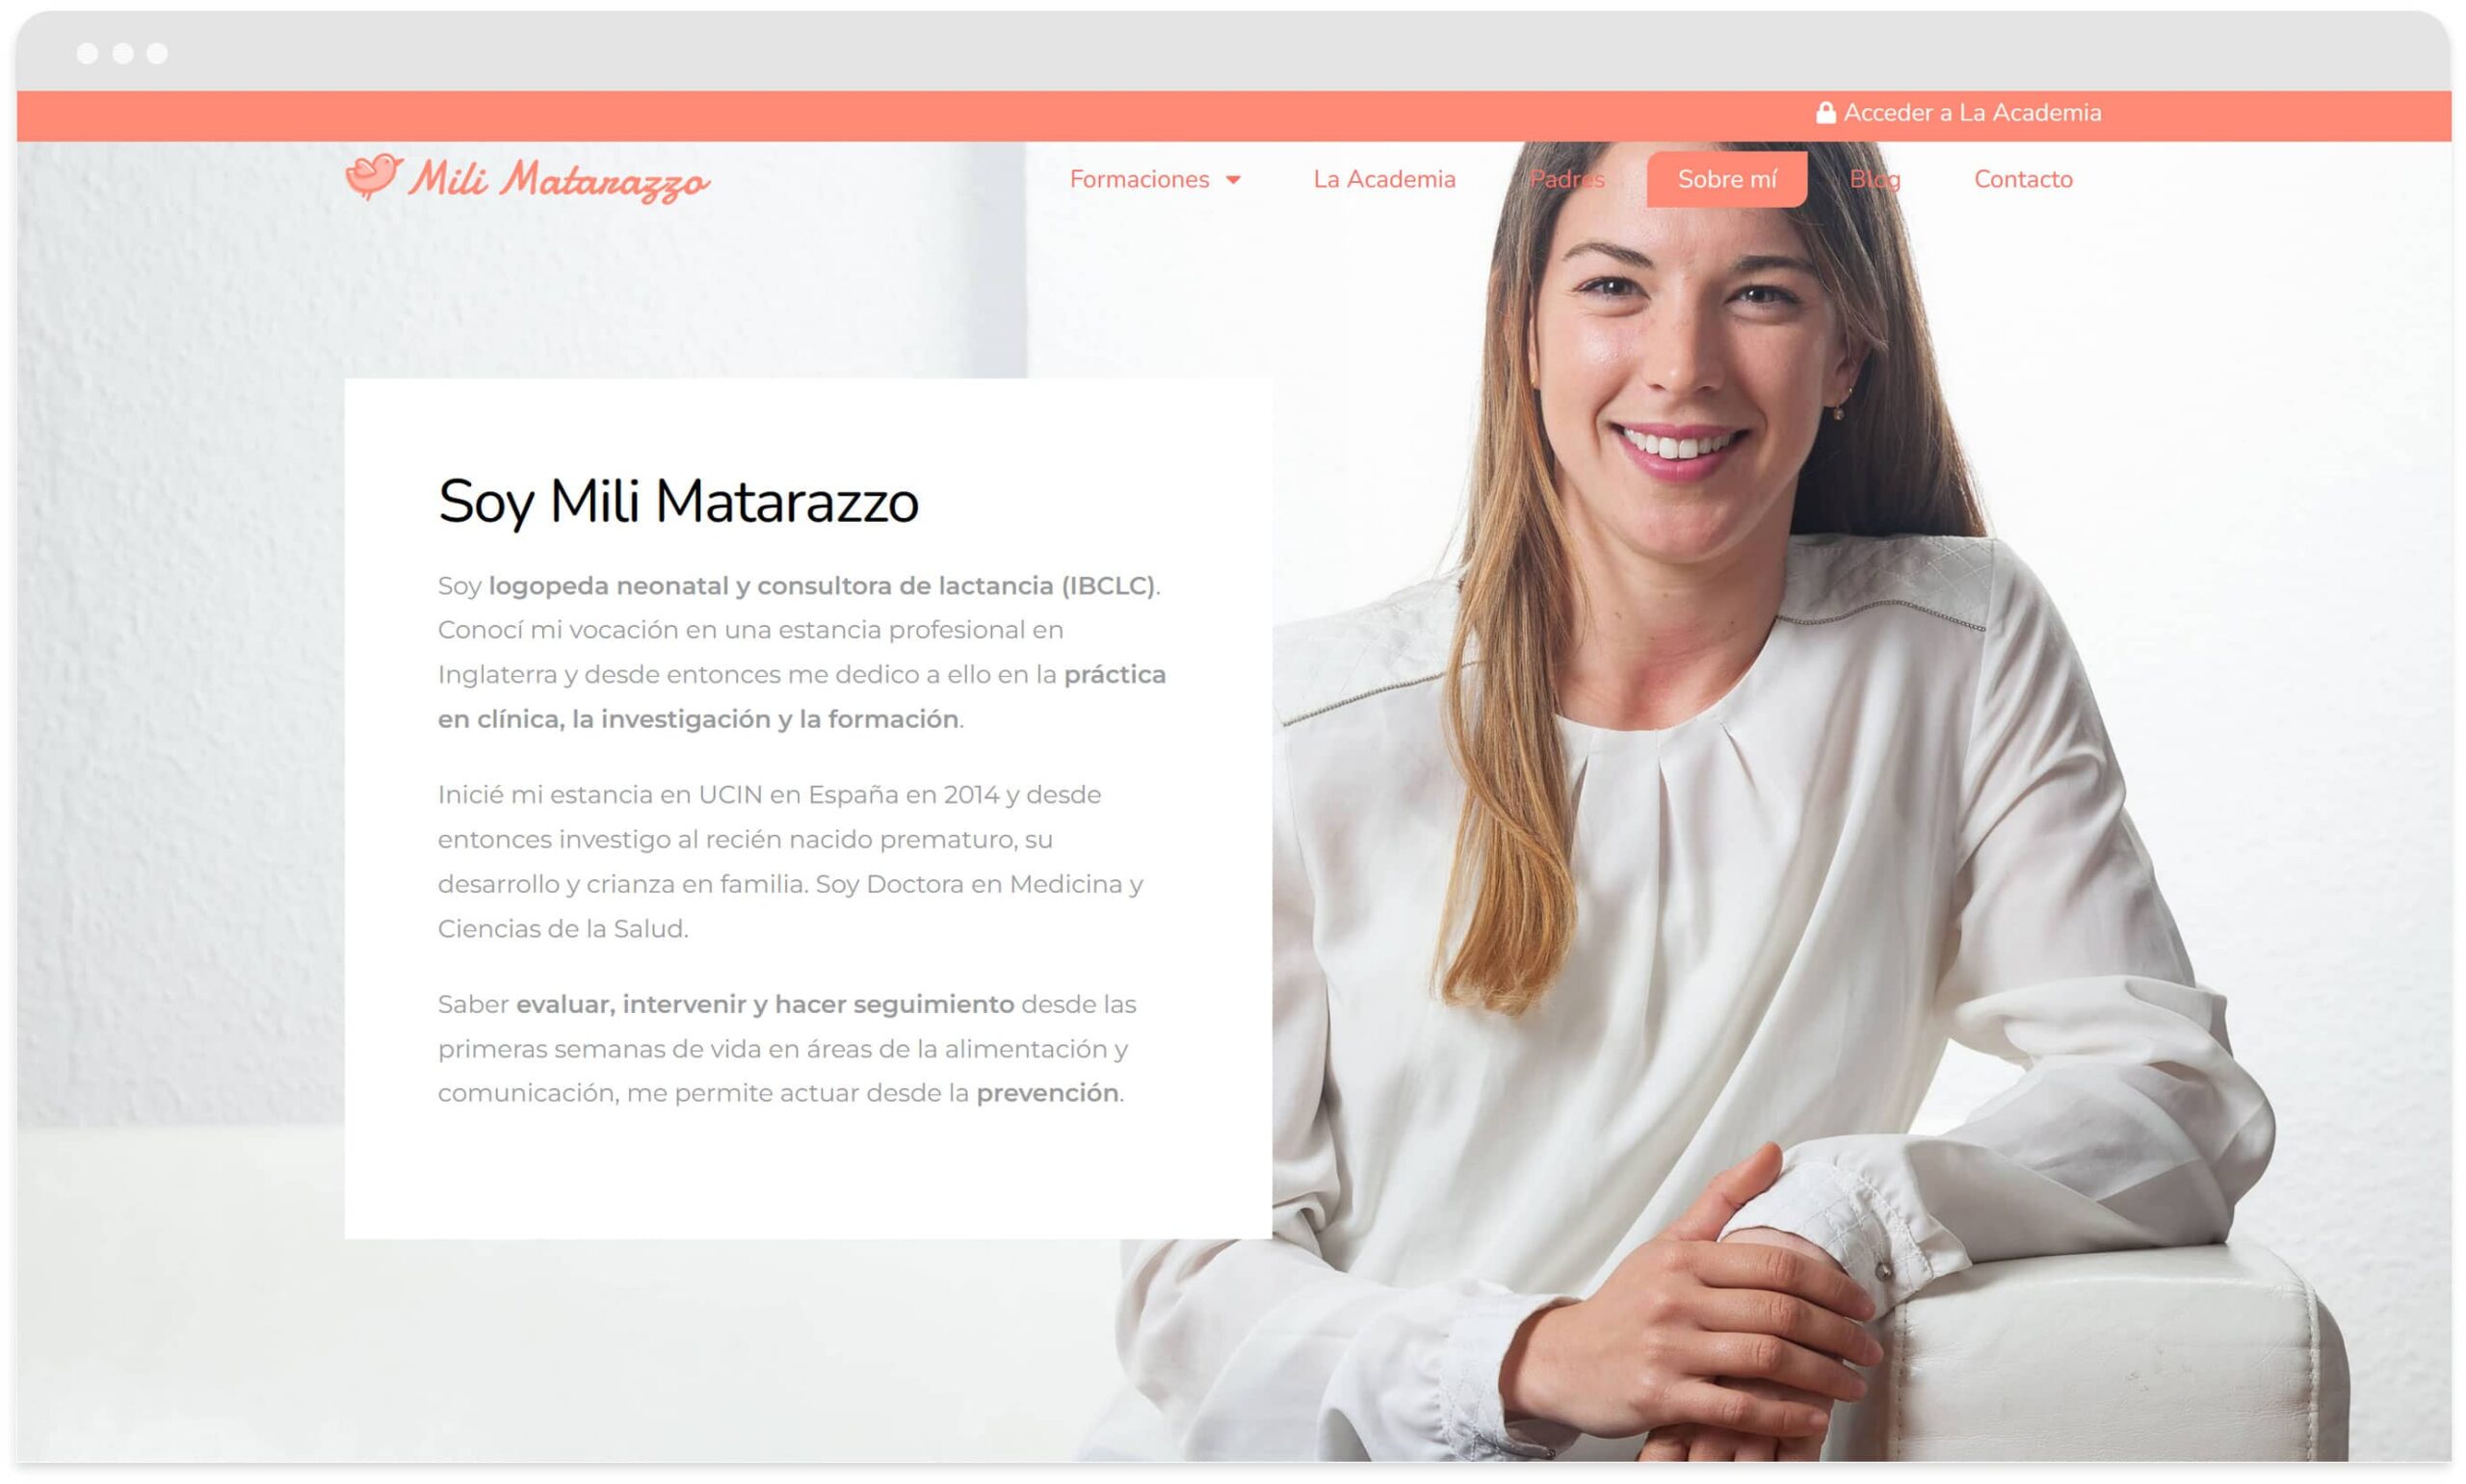 Proyecto Mili Matarazzo - Cursos Evergreen para profesionales sanitarios